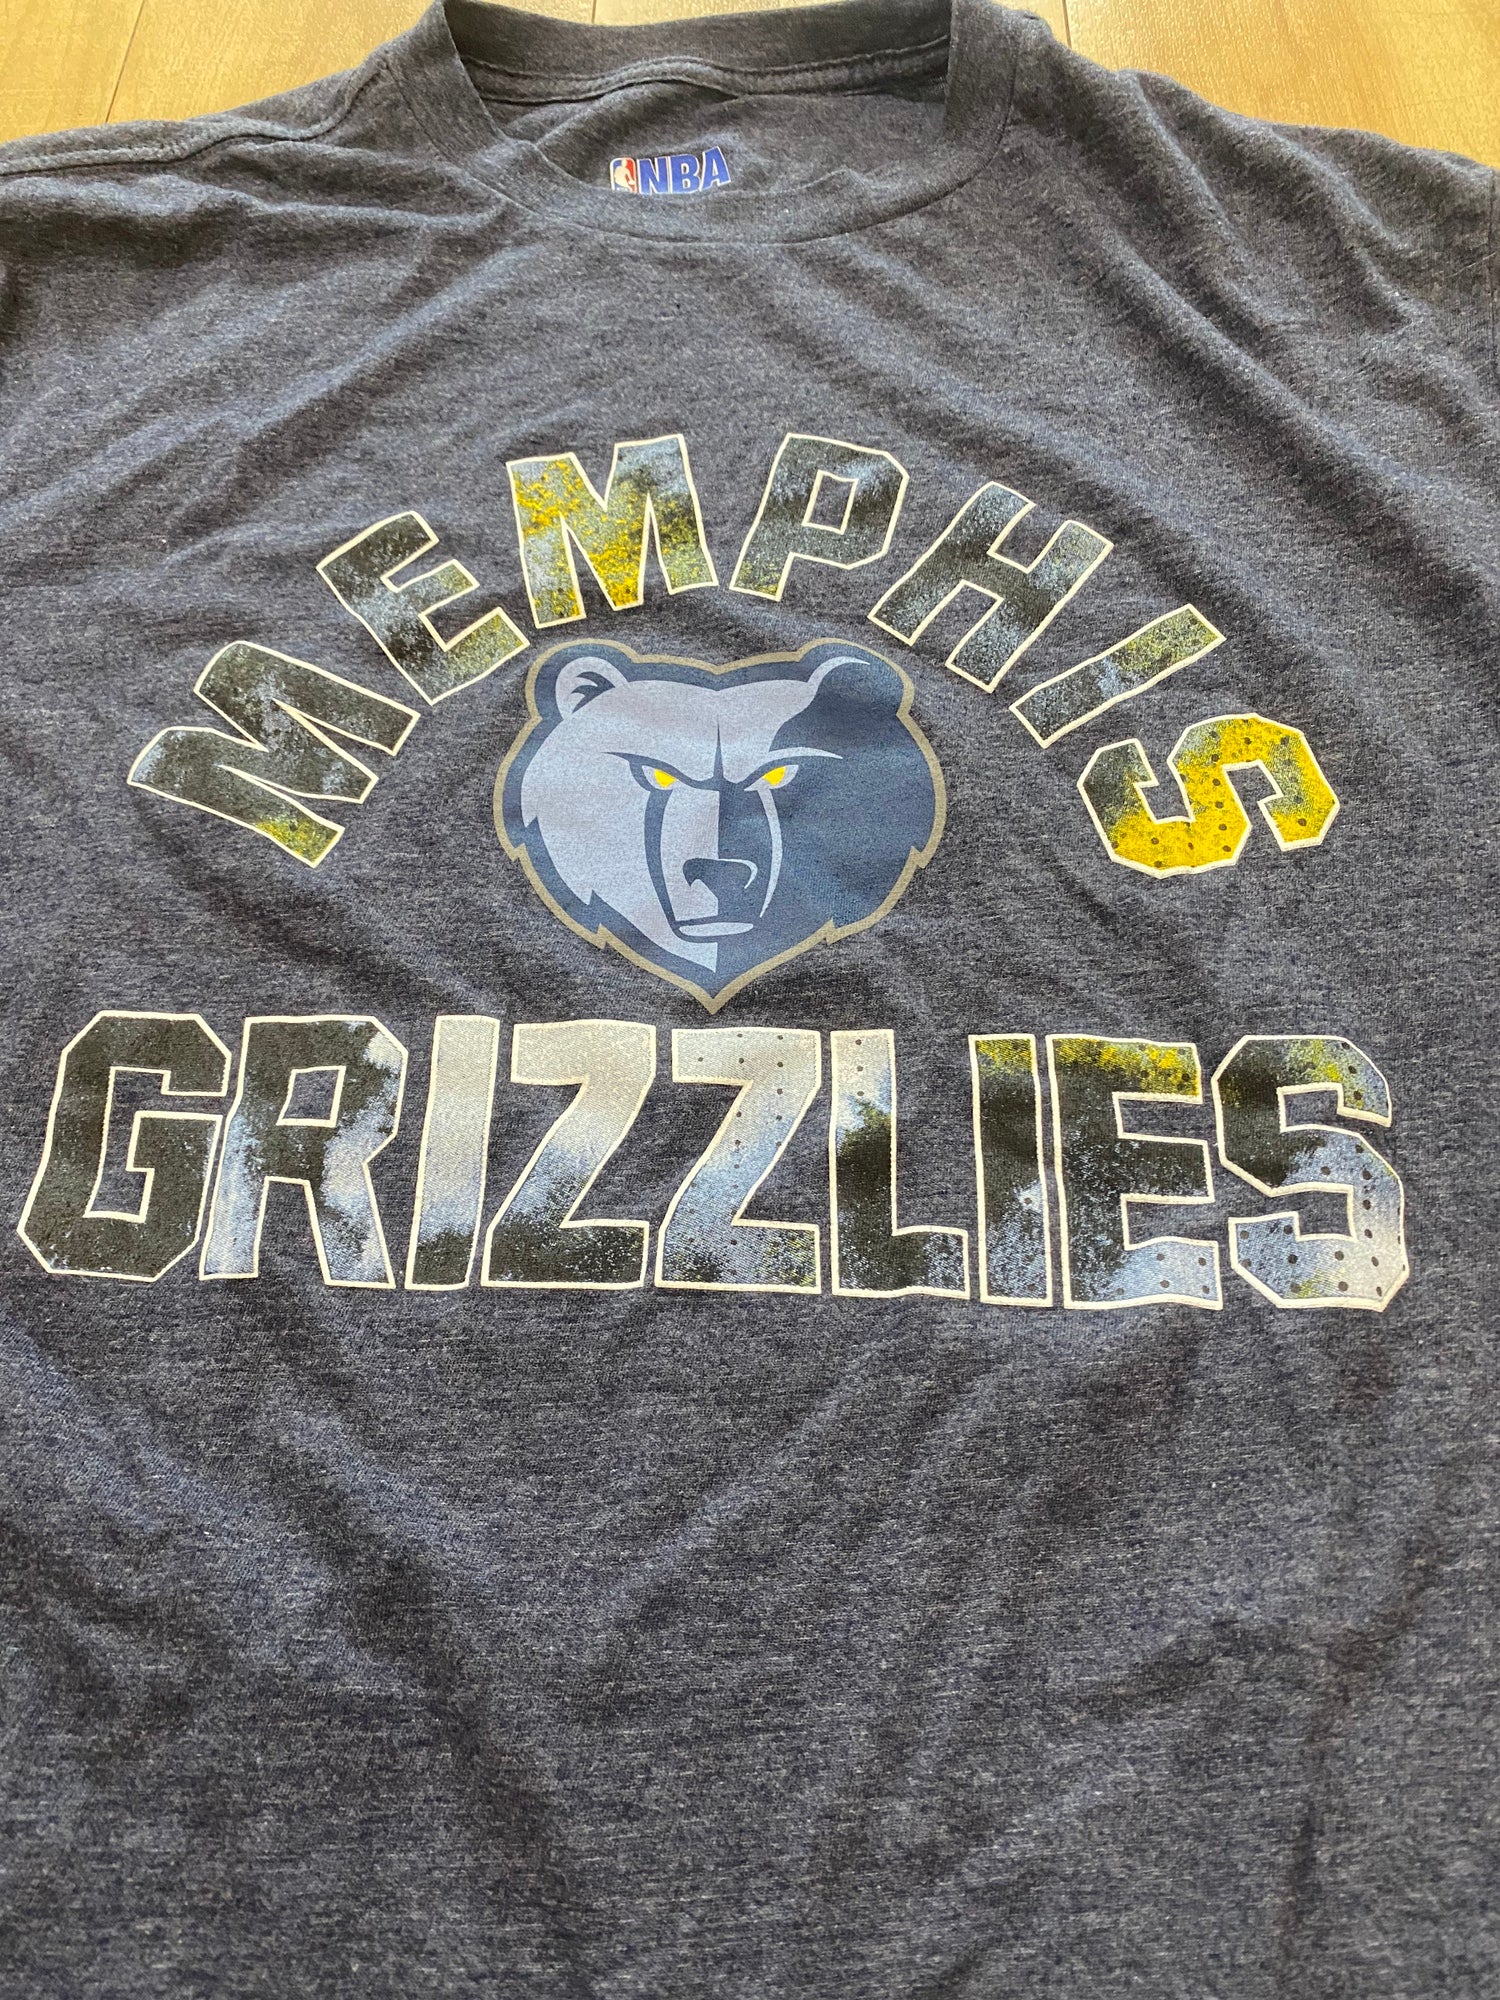 memphis grizzlies playoff shirts